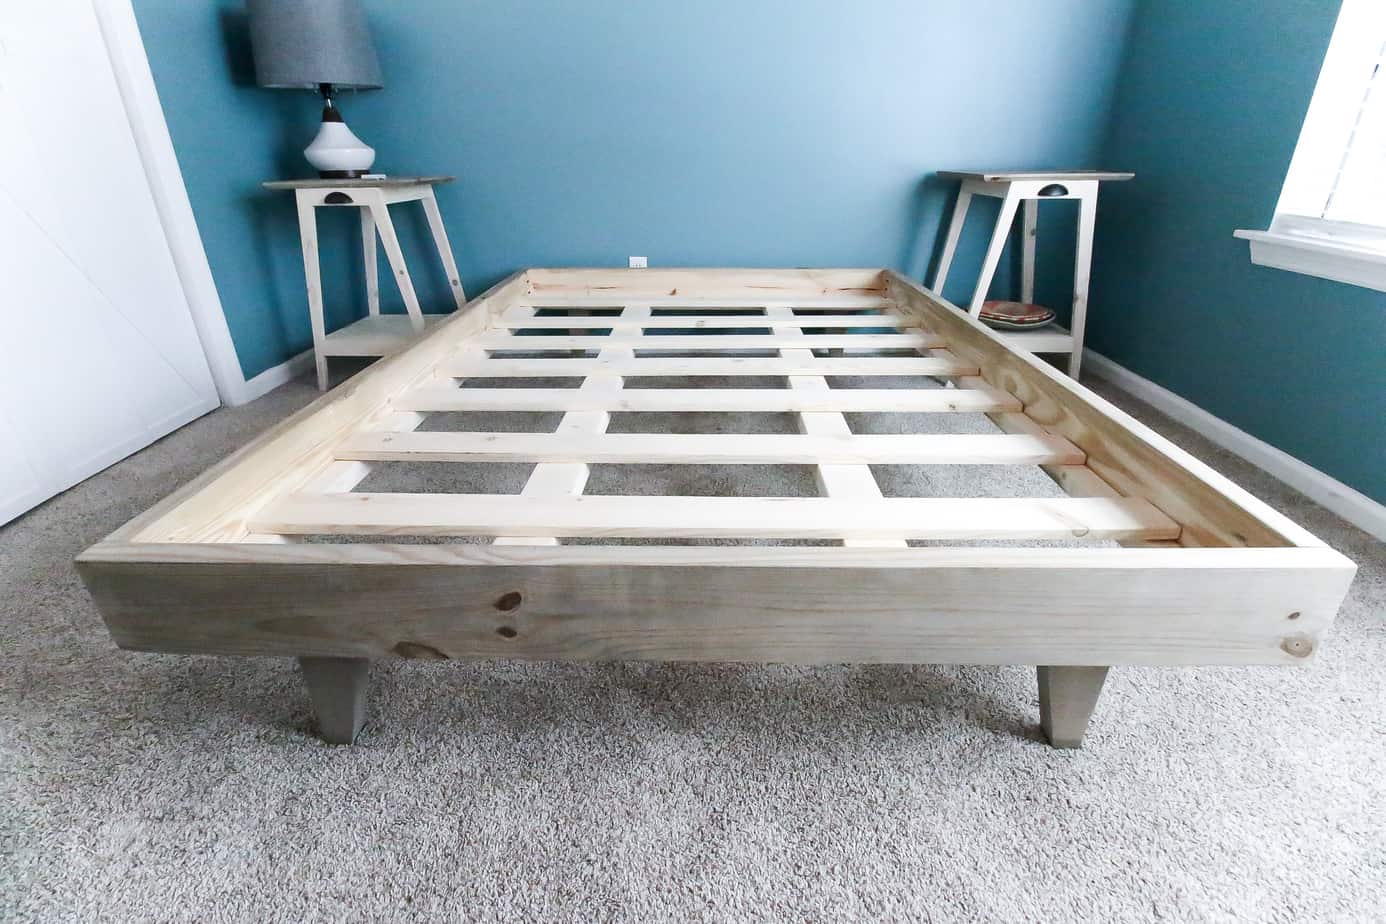 How To Build A Platform Bed For 50, Simple Diy King Bed Frame